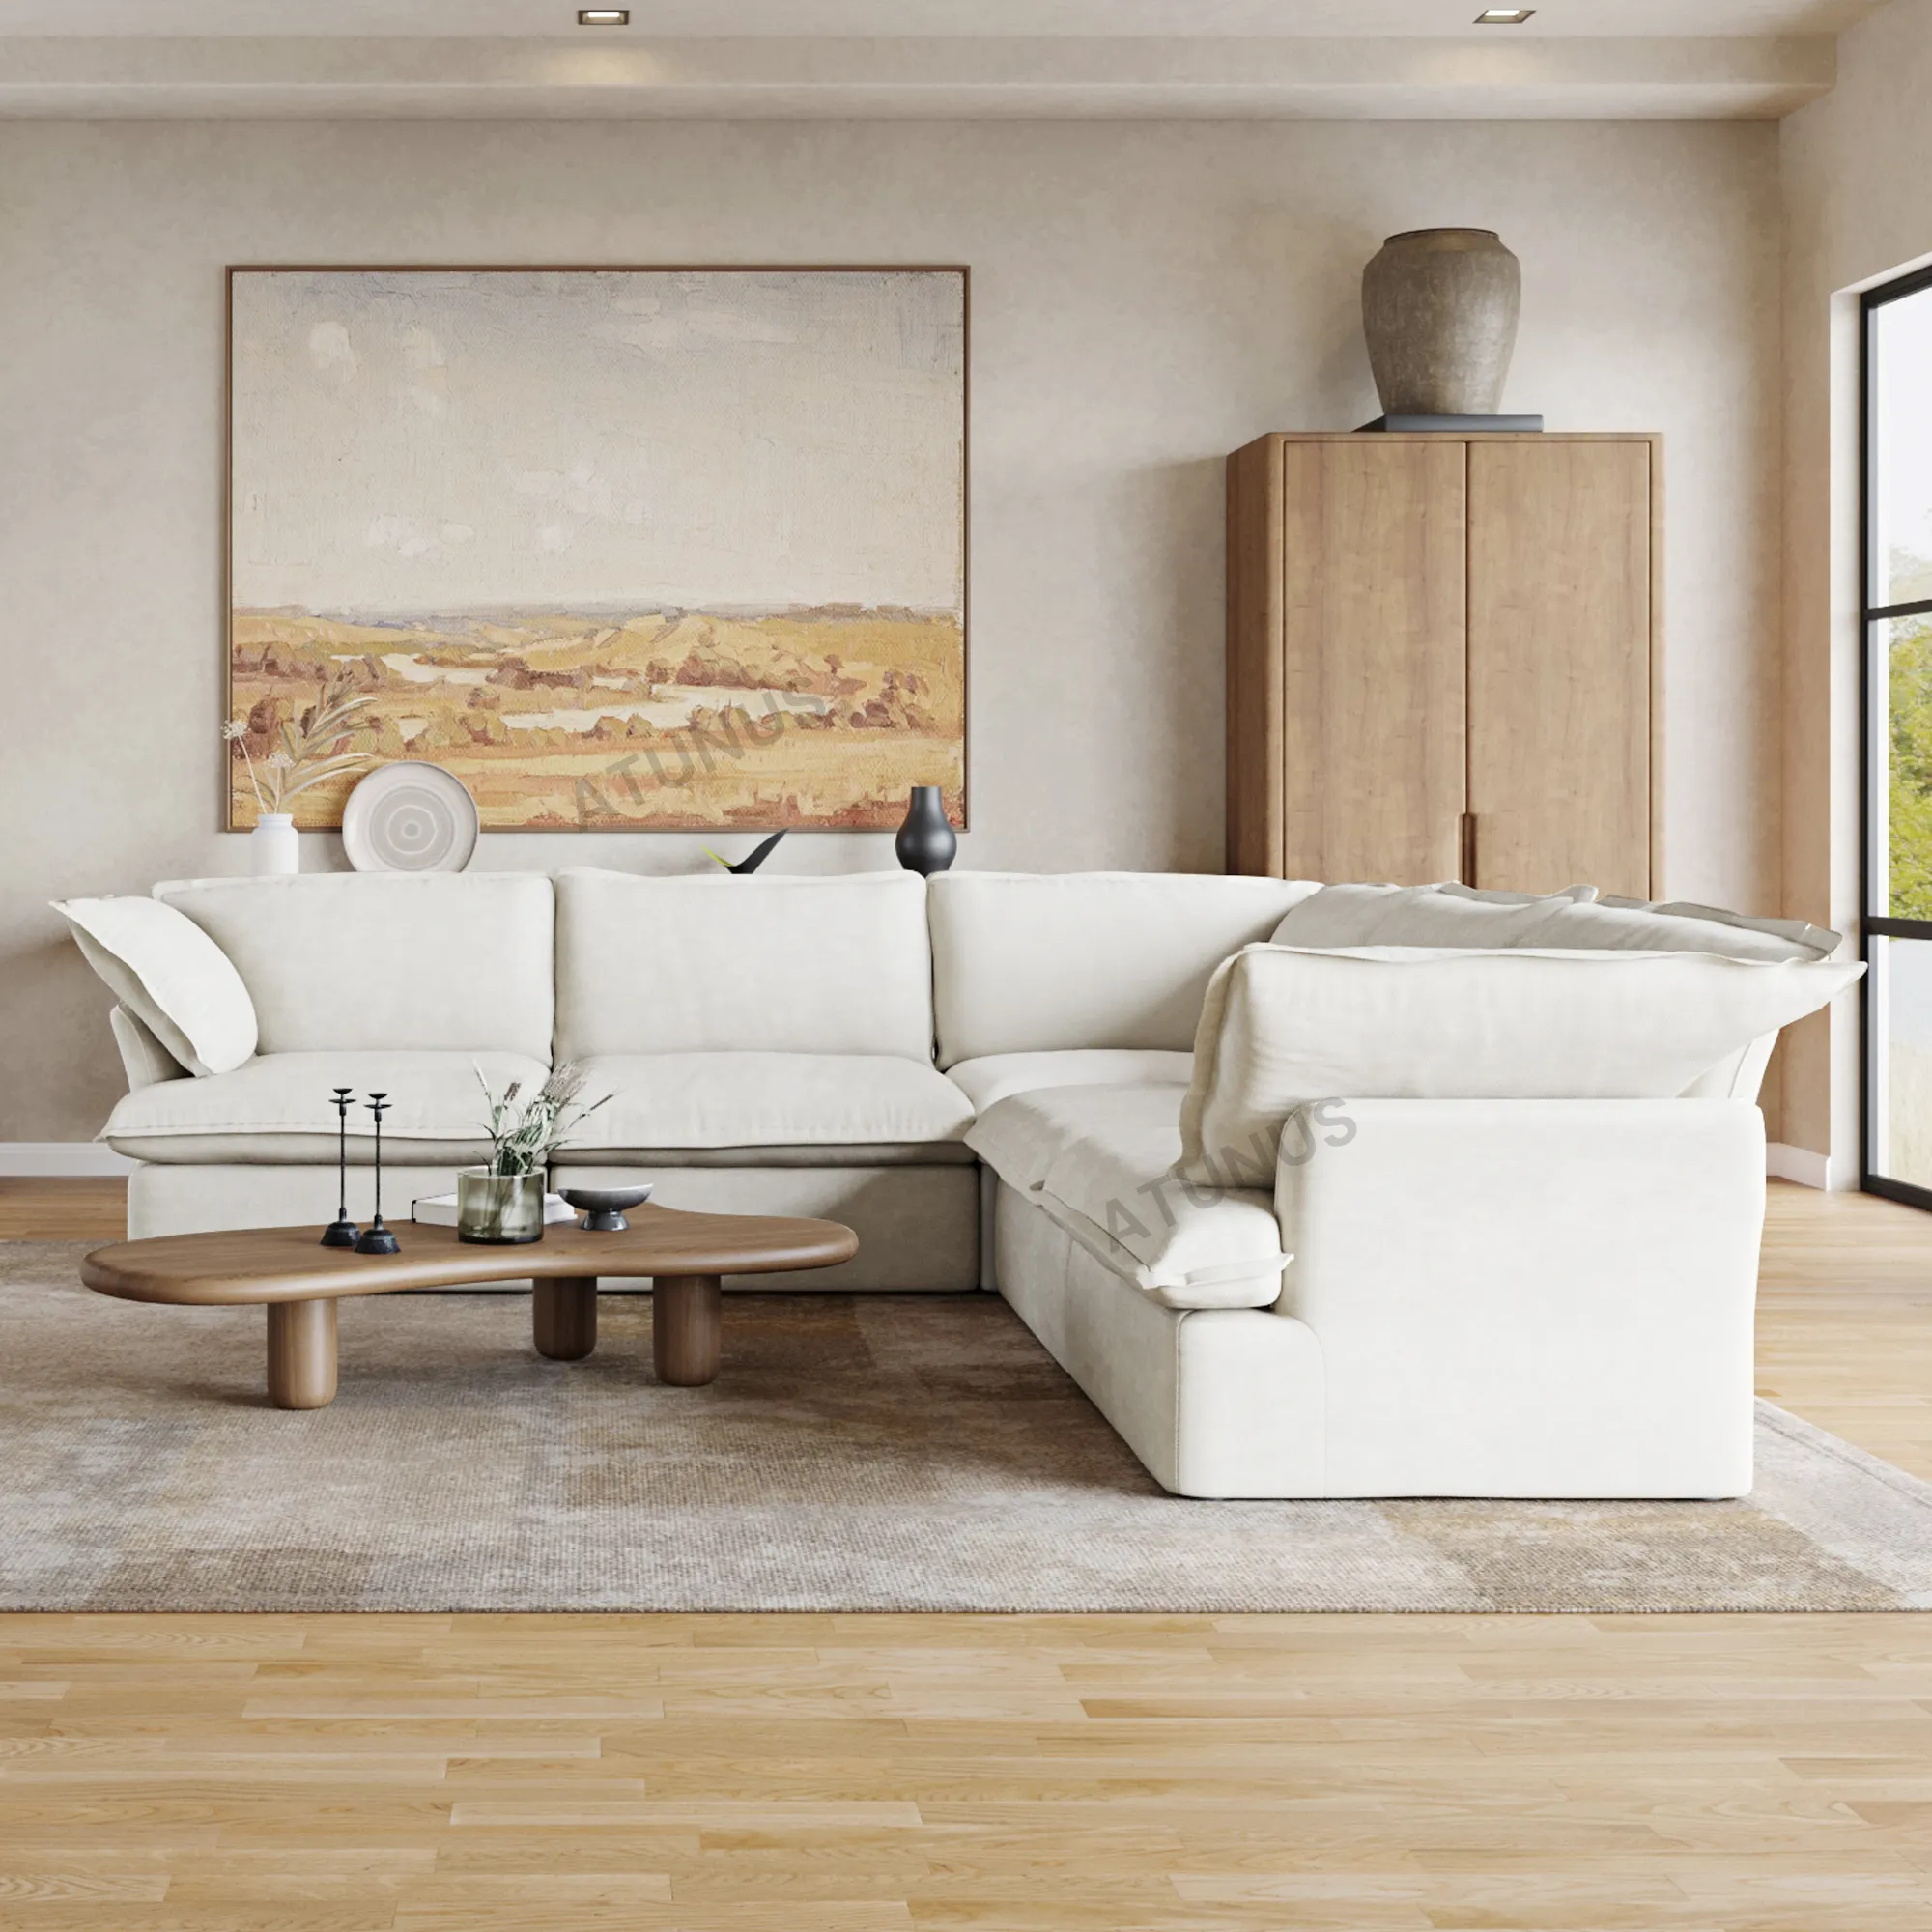 Juego de sofá Seccional de alto rendimiento ATUNUS Wabi Sabi, muebles de sala de estar, sofá modular nórdico a prueba de agua